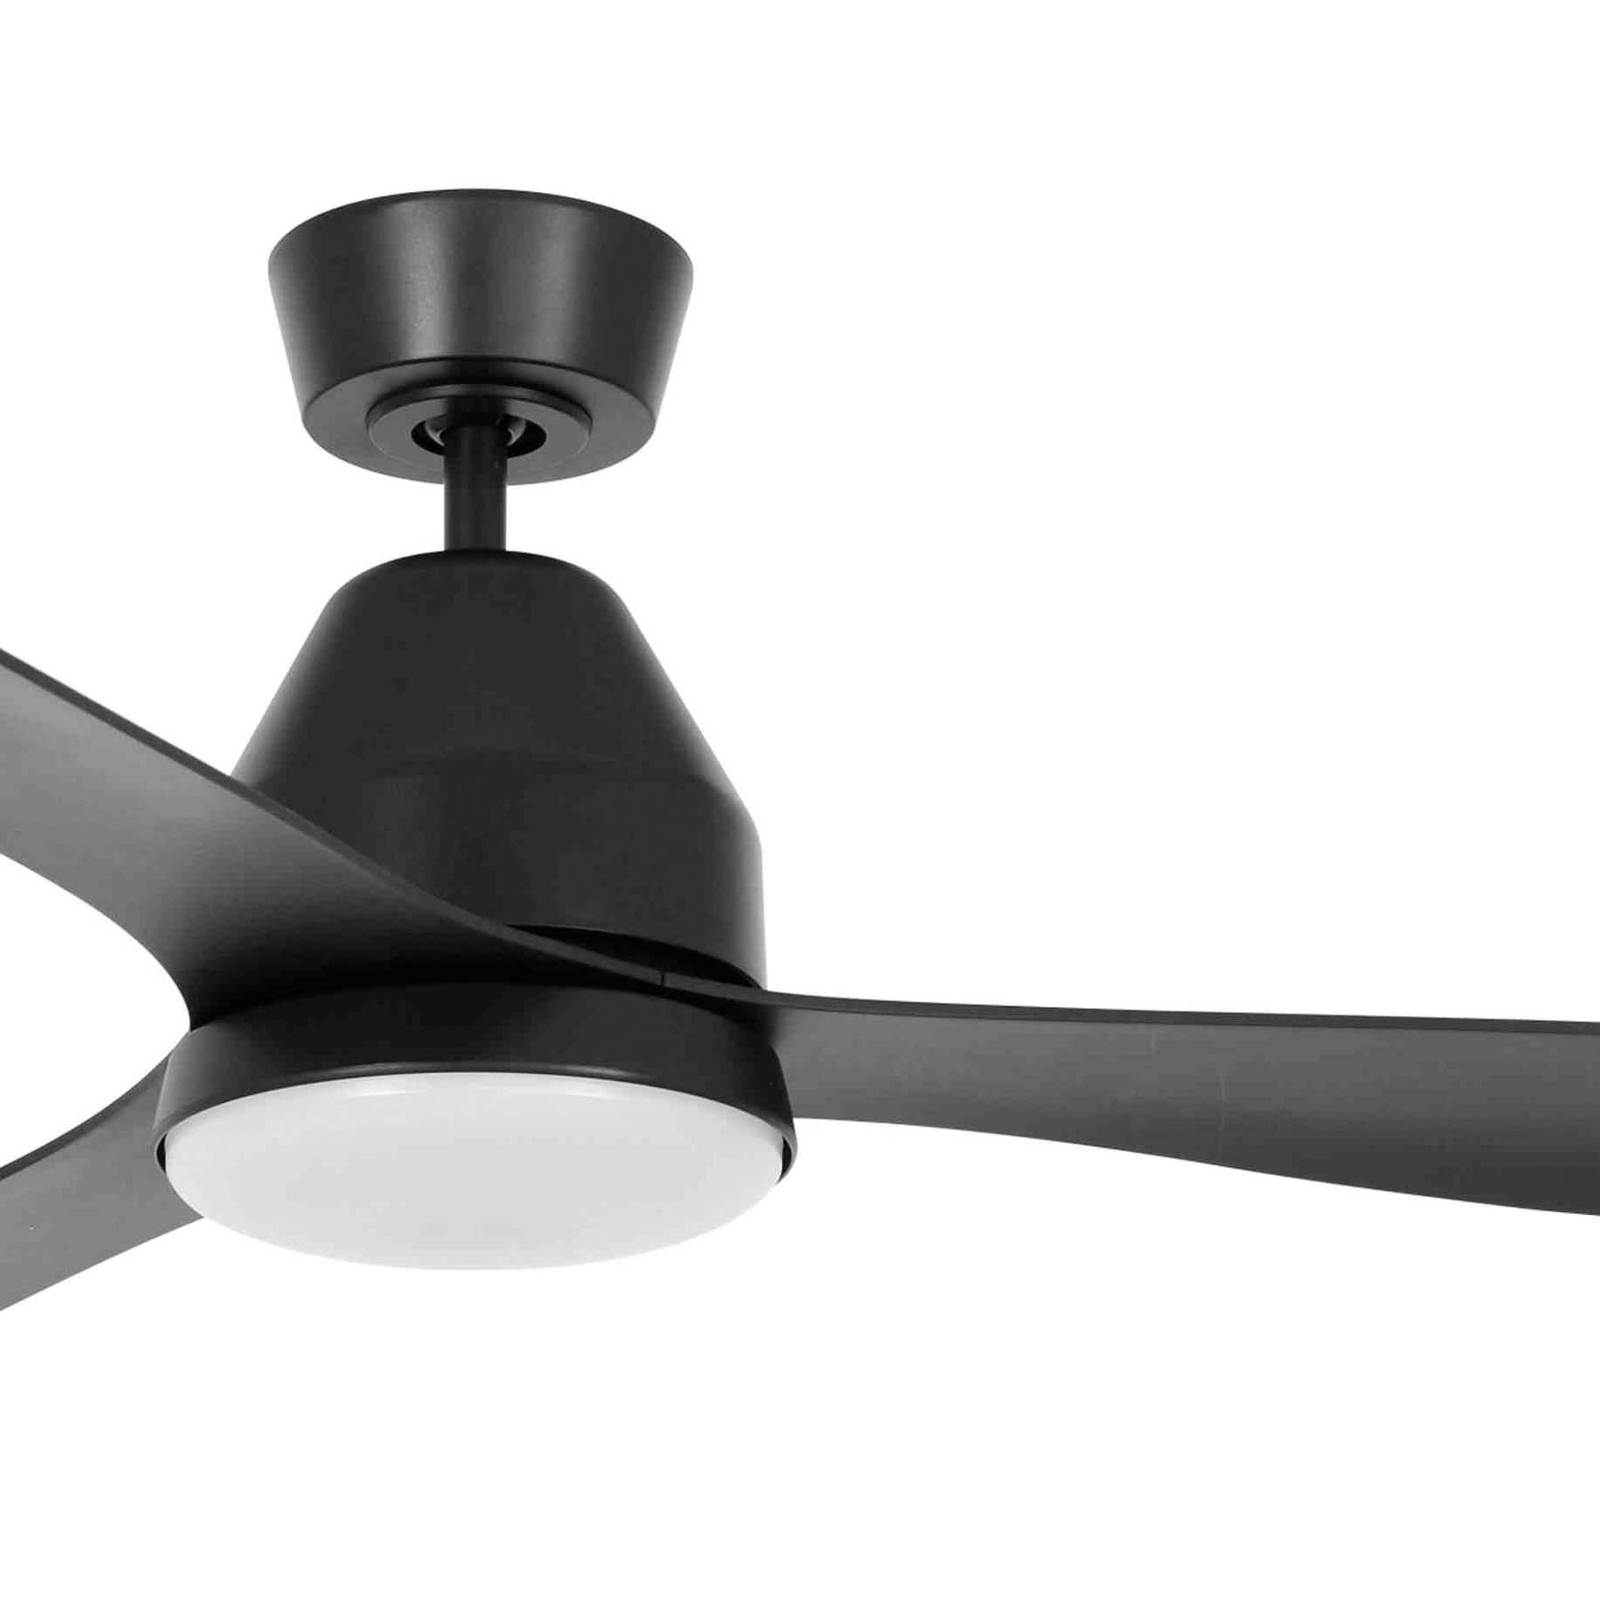 Beacon ceiling fan with light Whitehaven, black, quiet